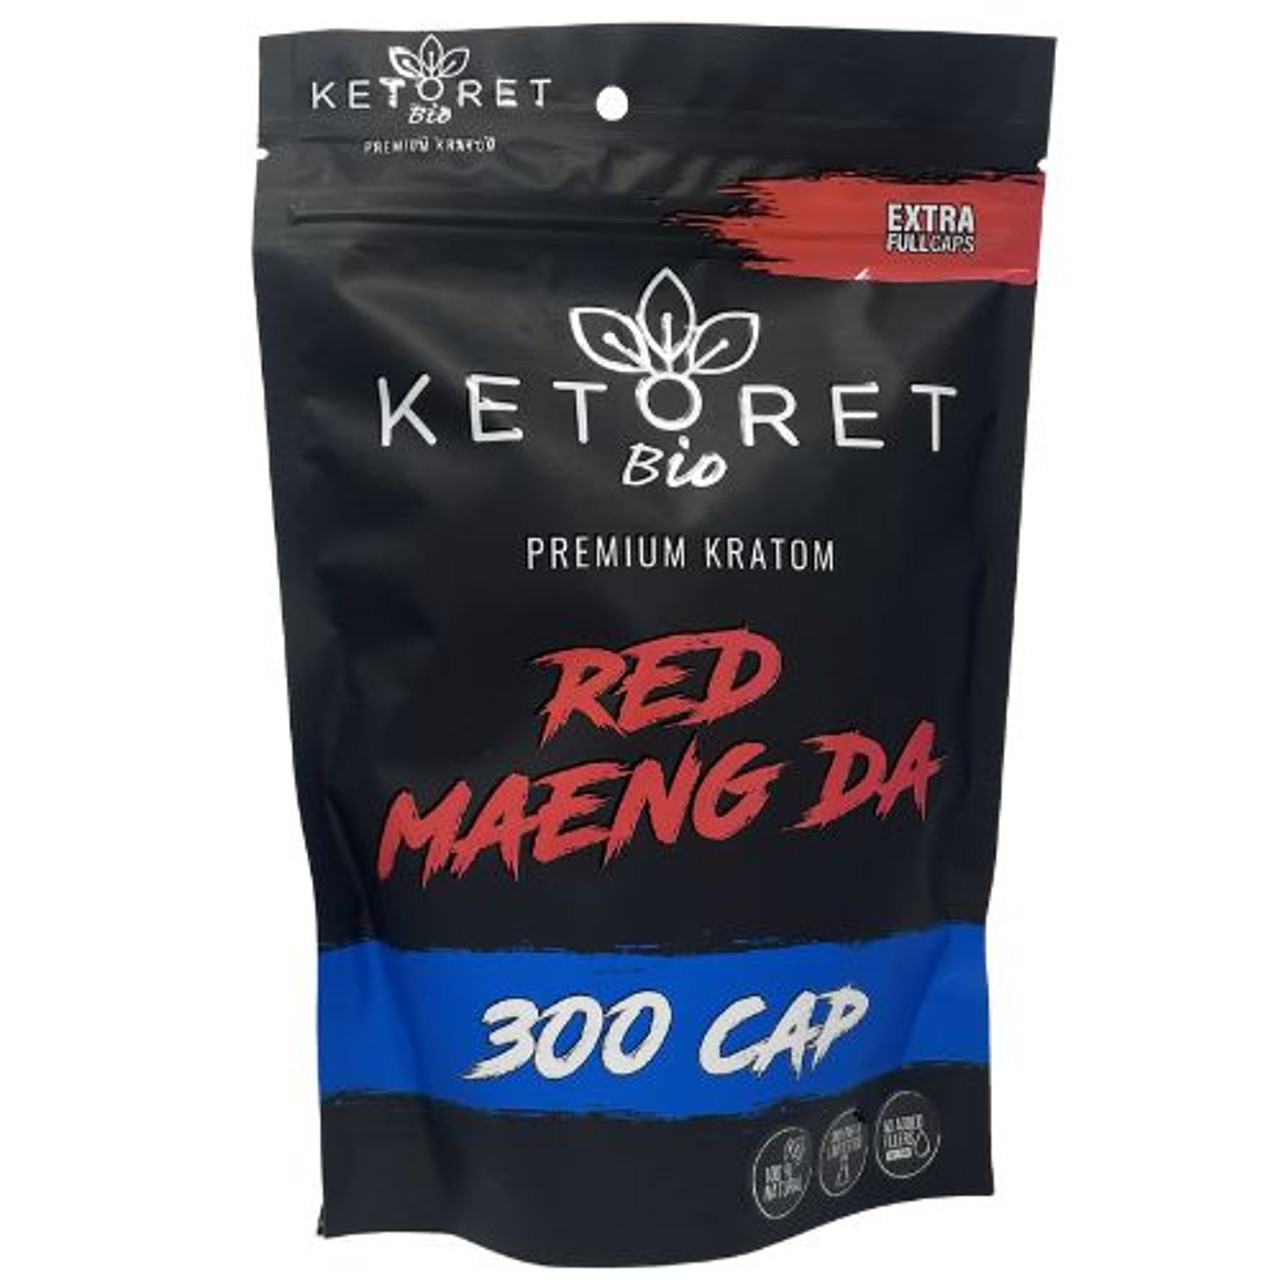 Ketoret Kratom Capsules - Red Maeng Da 300 Caps